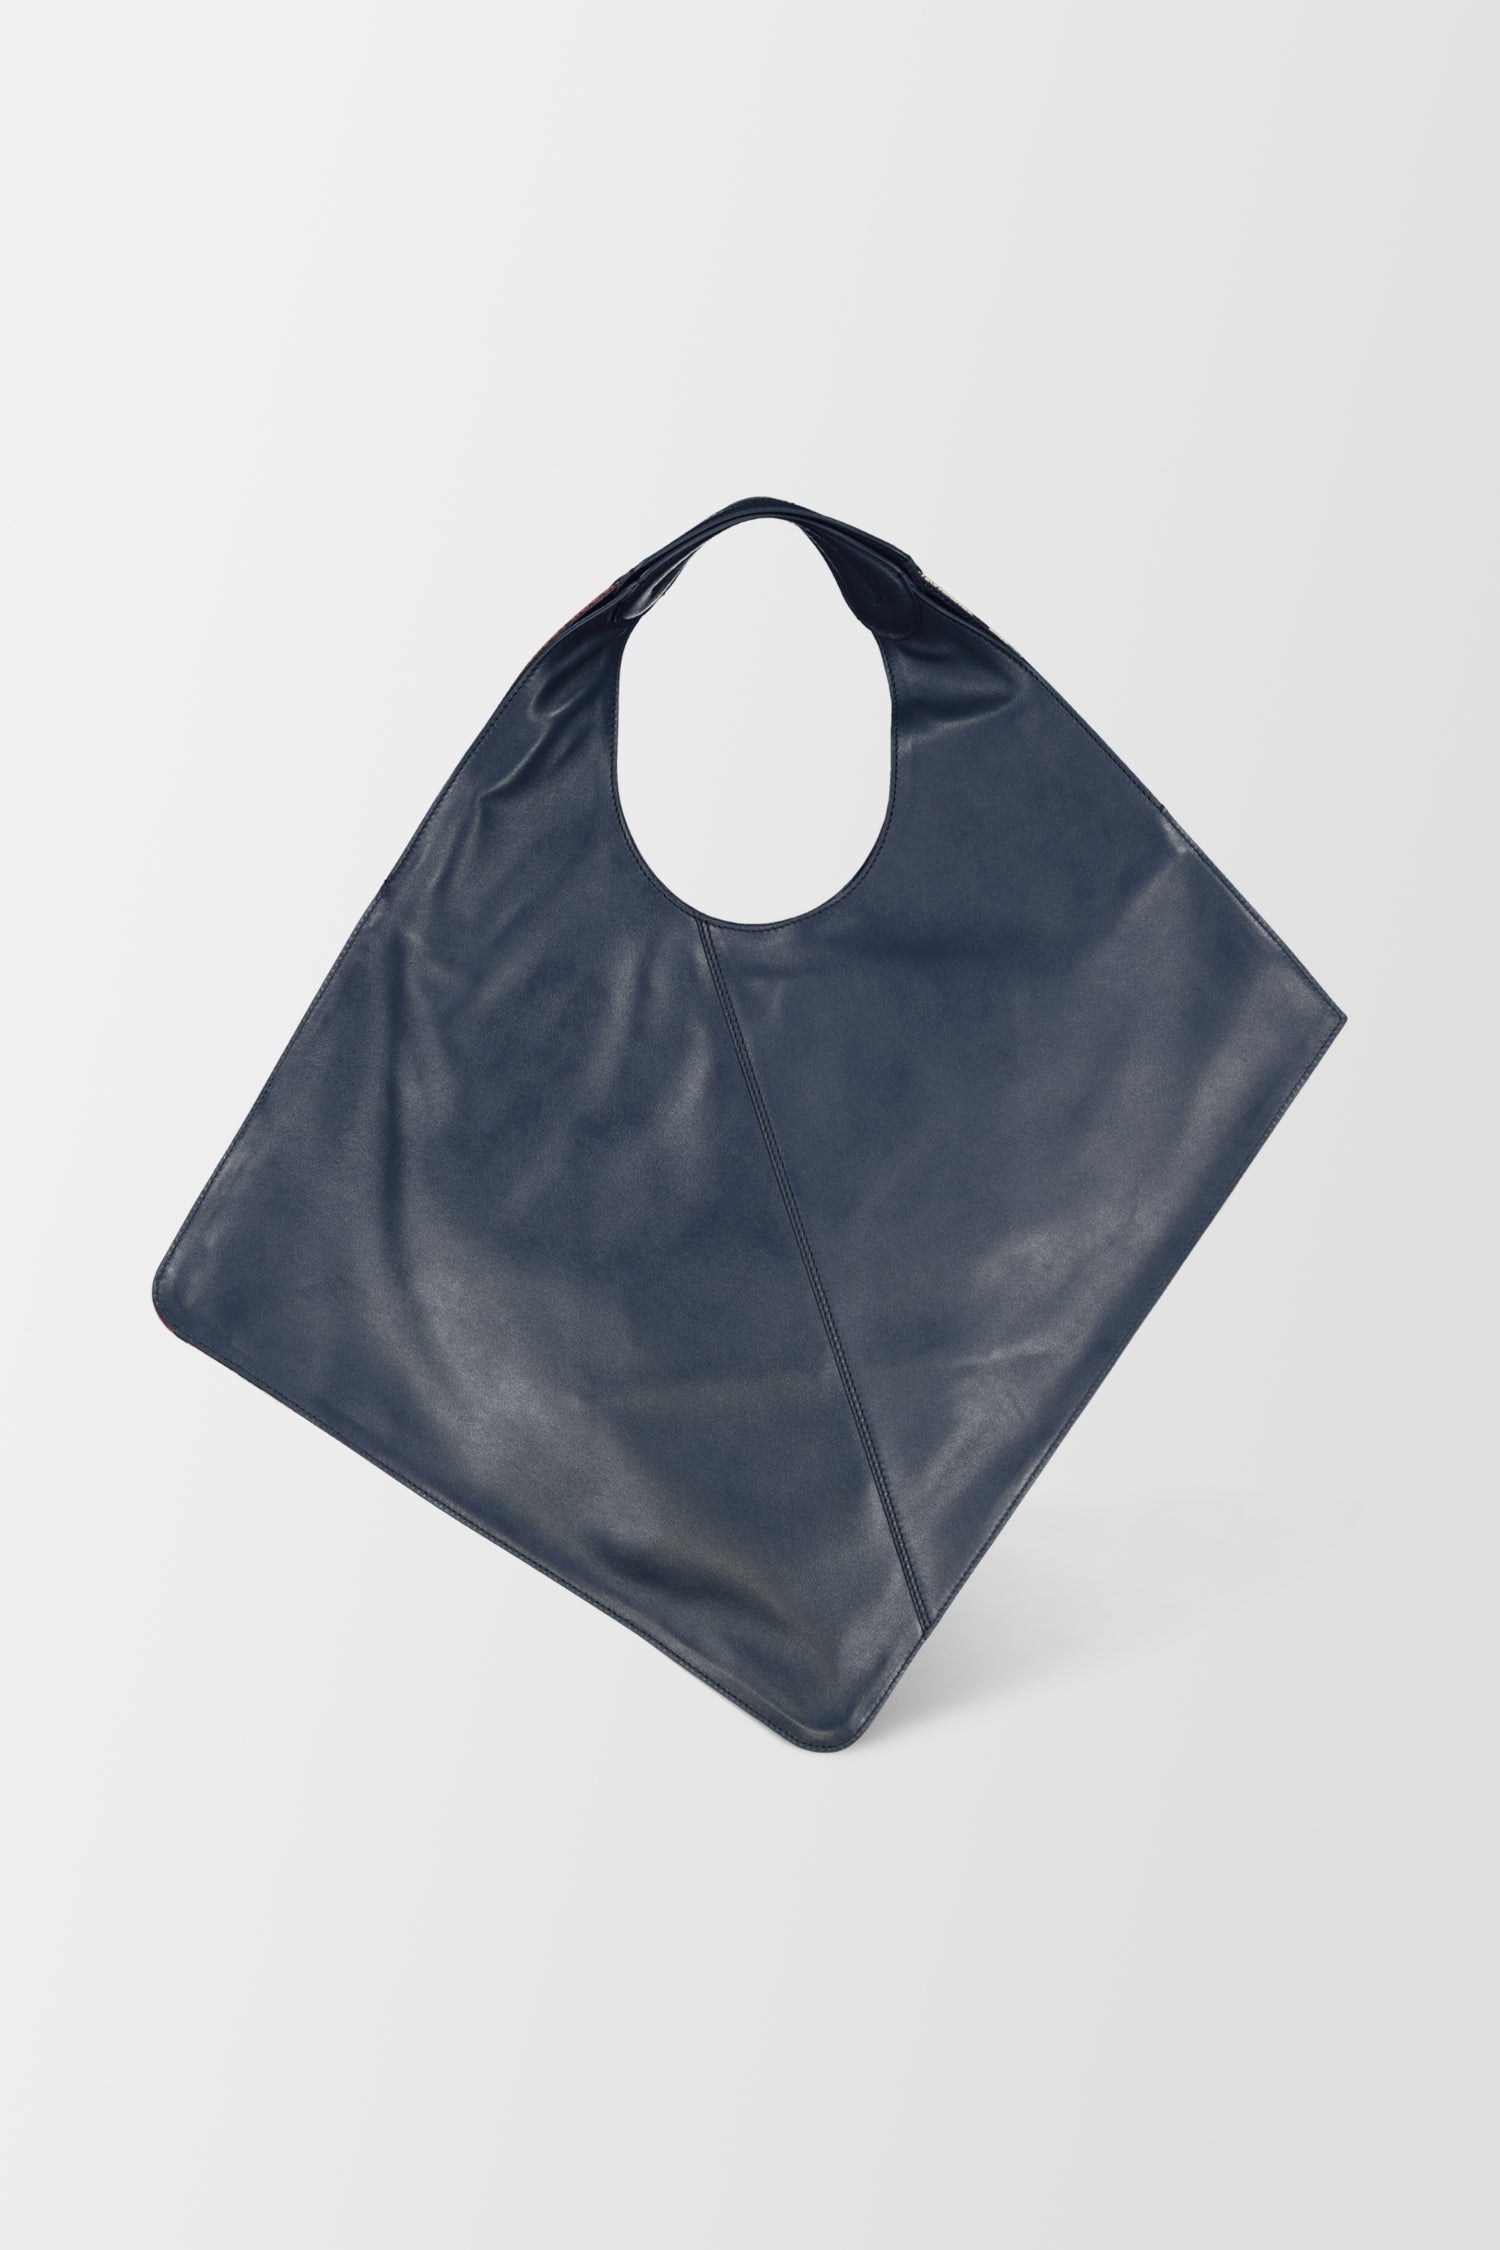 Mantero Multicolour Carre' Handbag